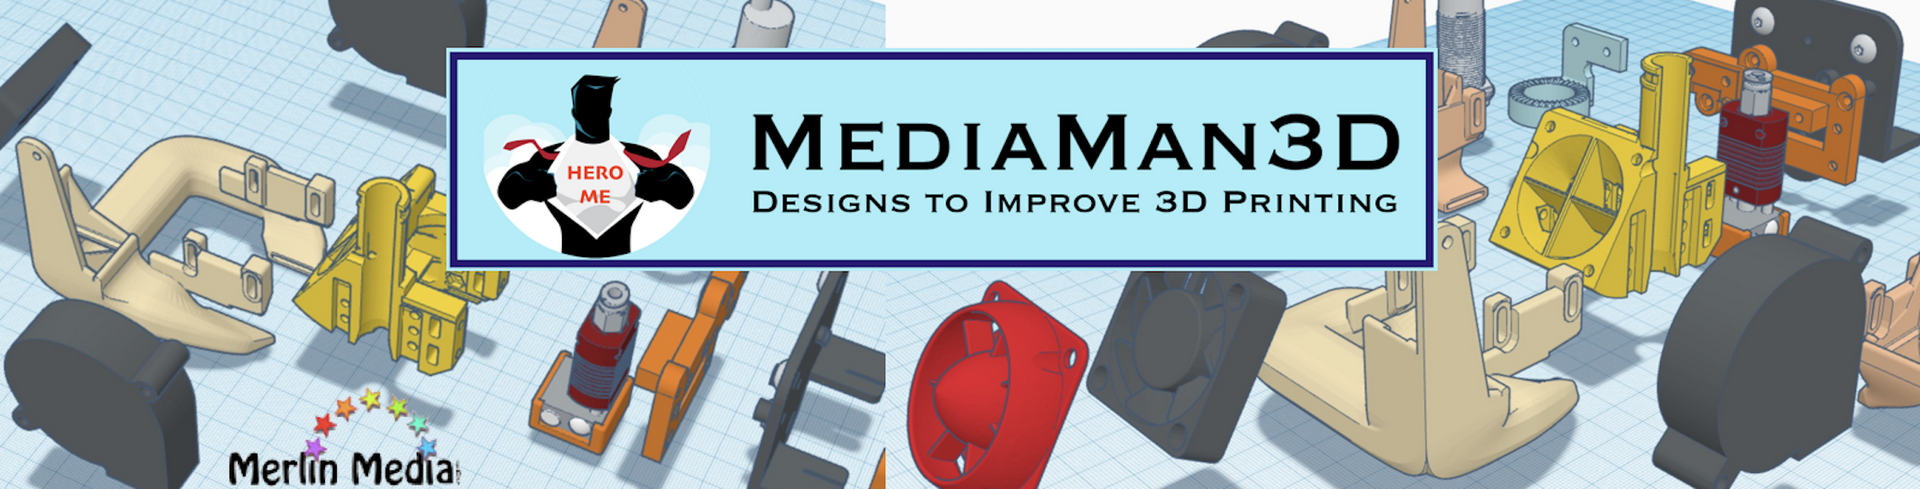 MediaMan3D Banner - Designs to improve 3D printing